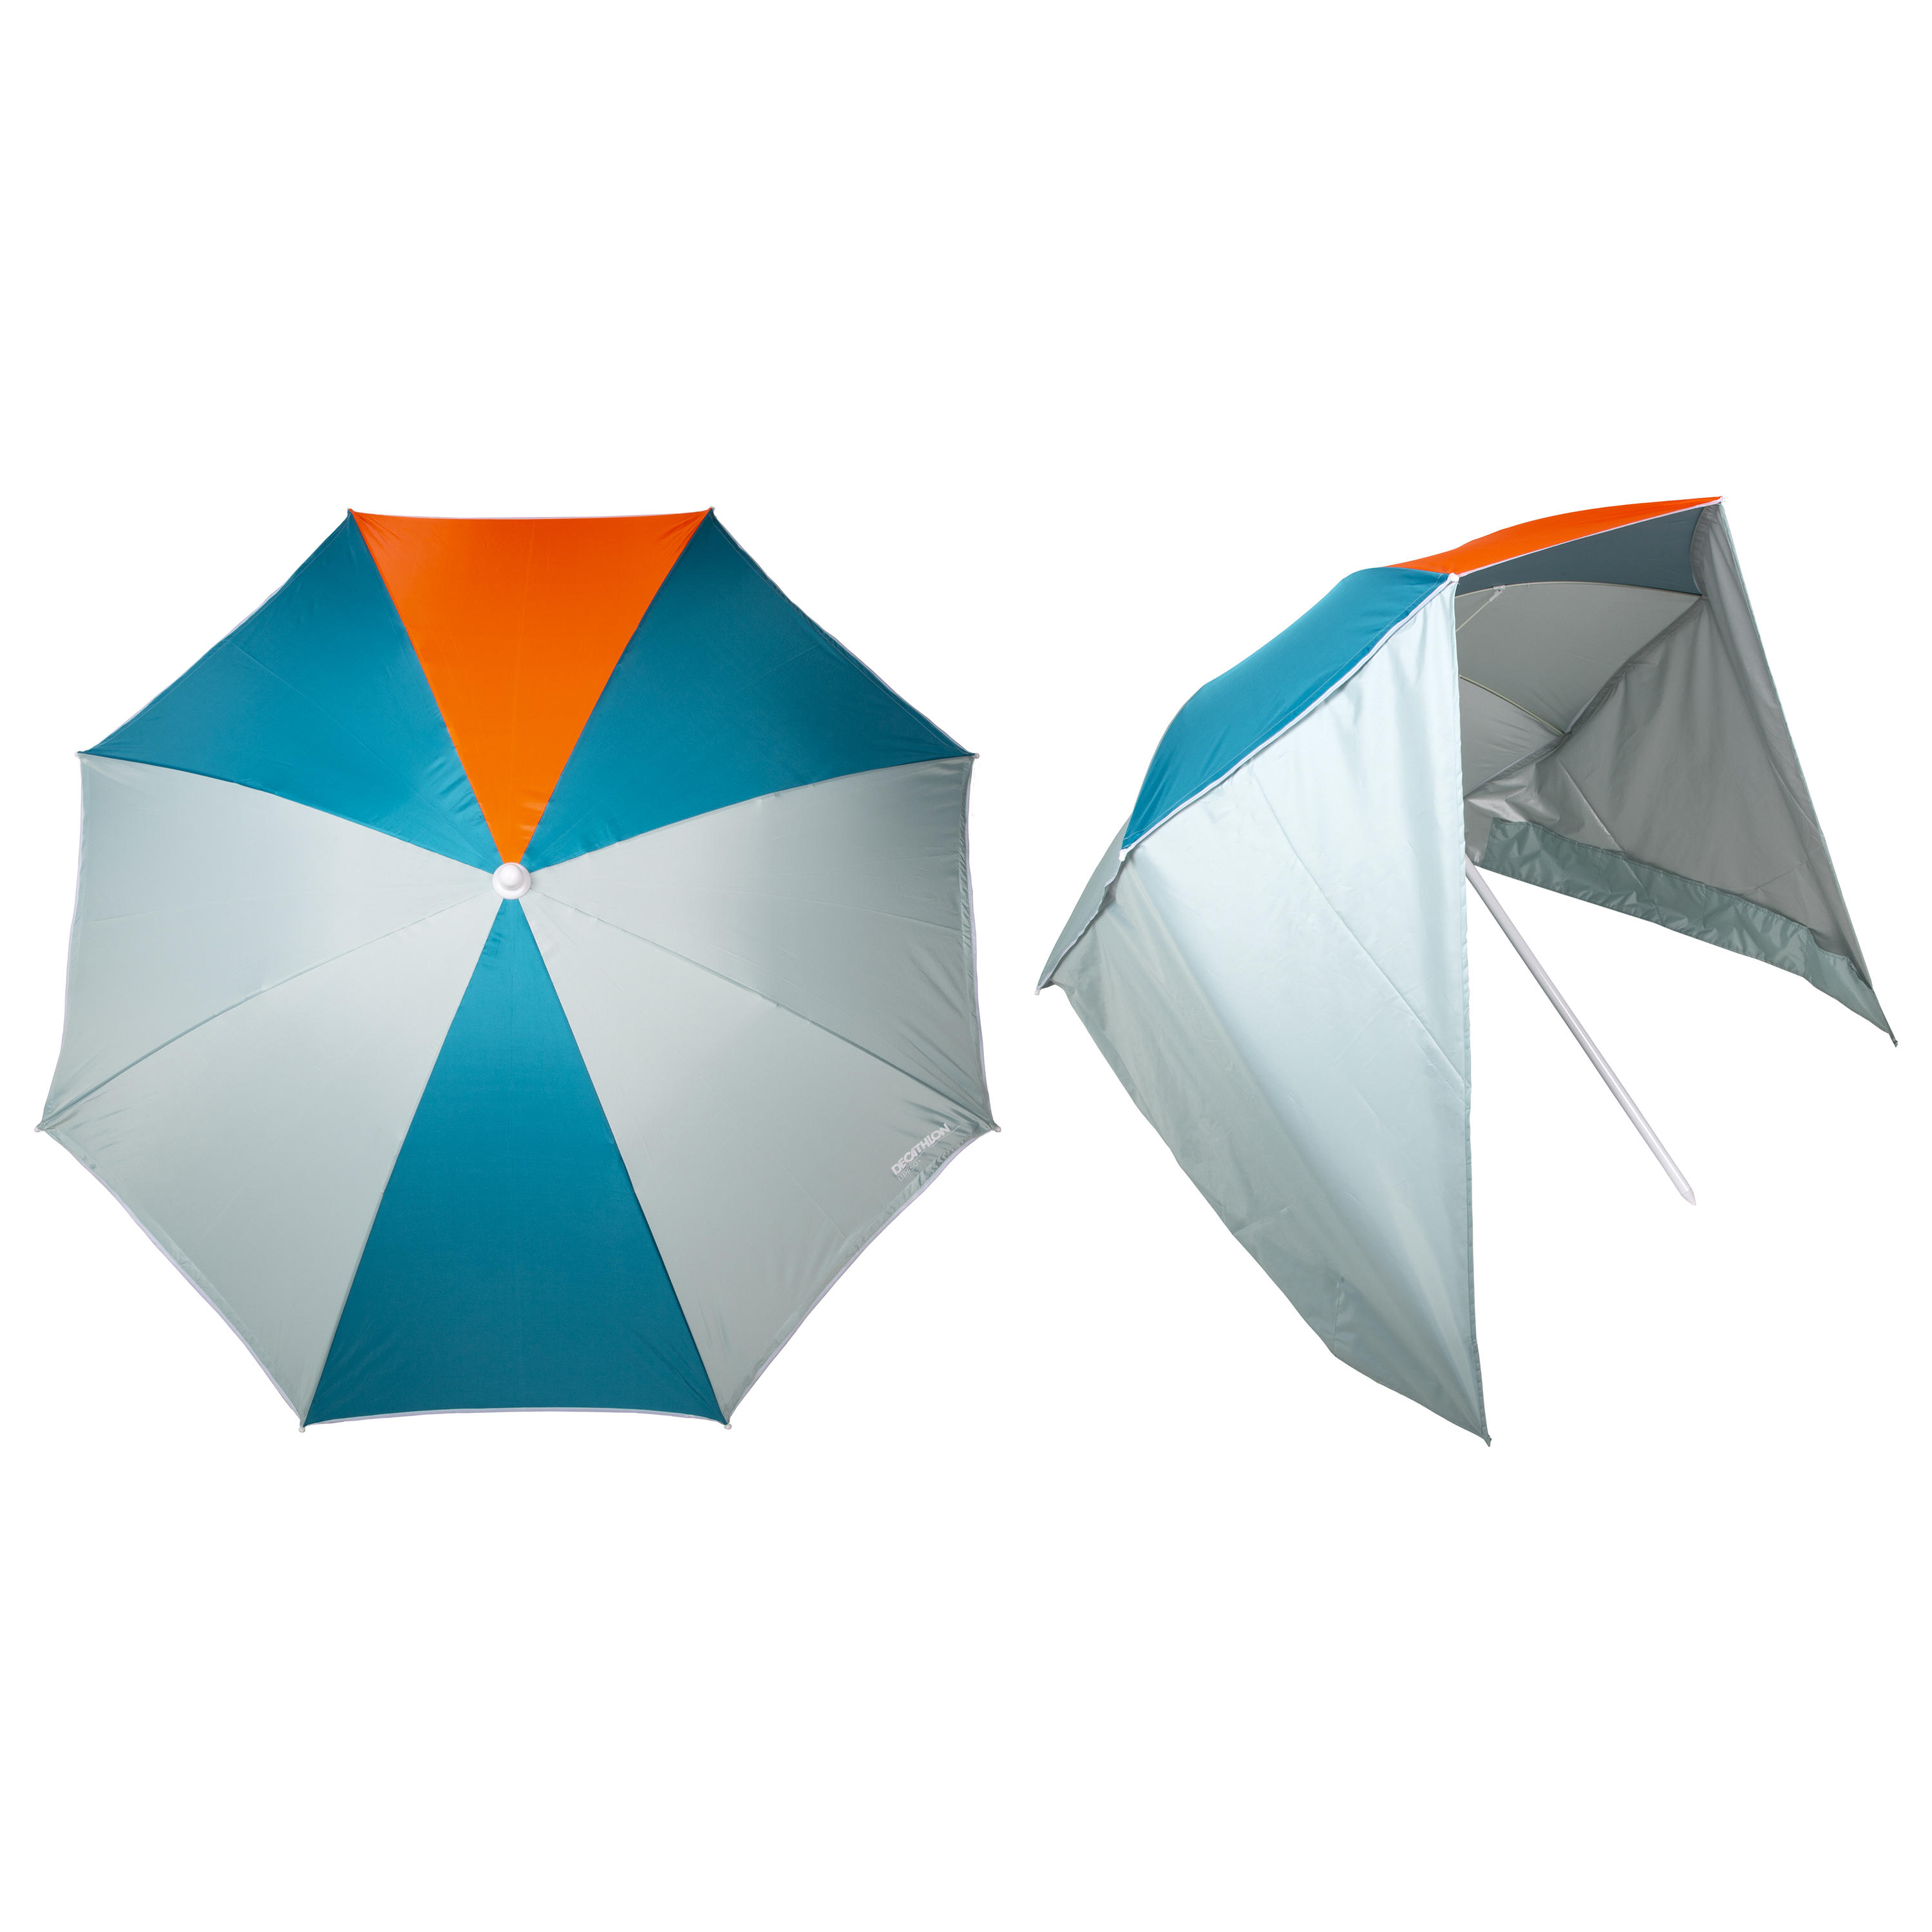 decathlon uv umbrella